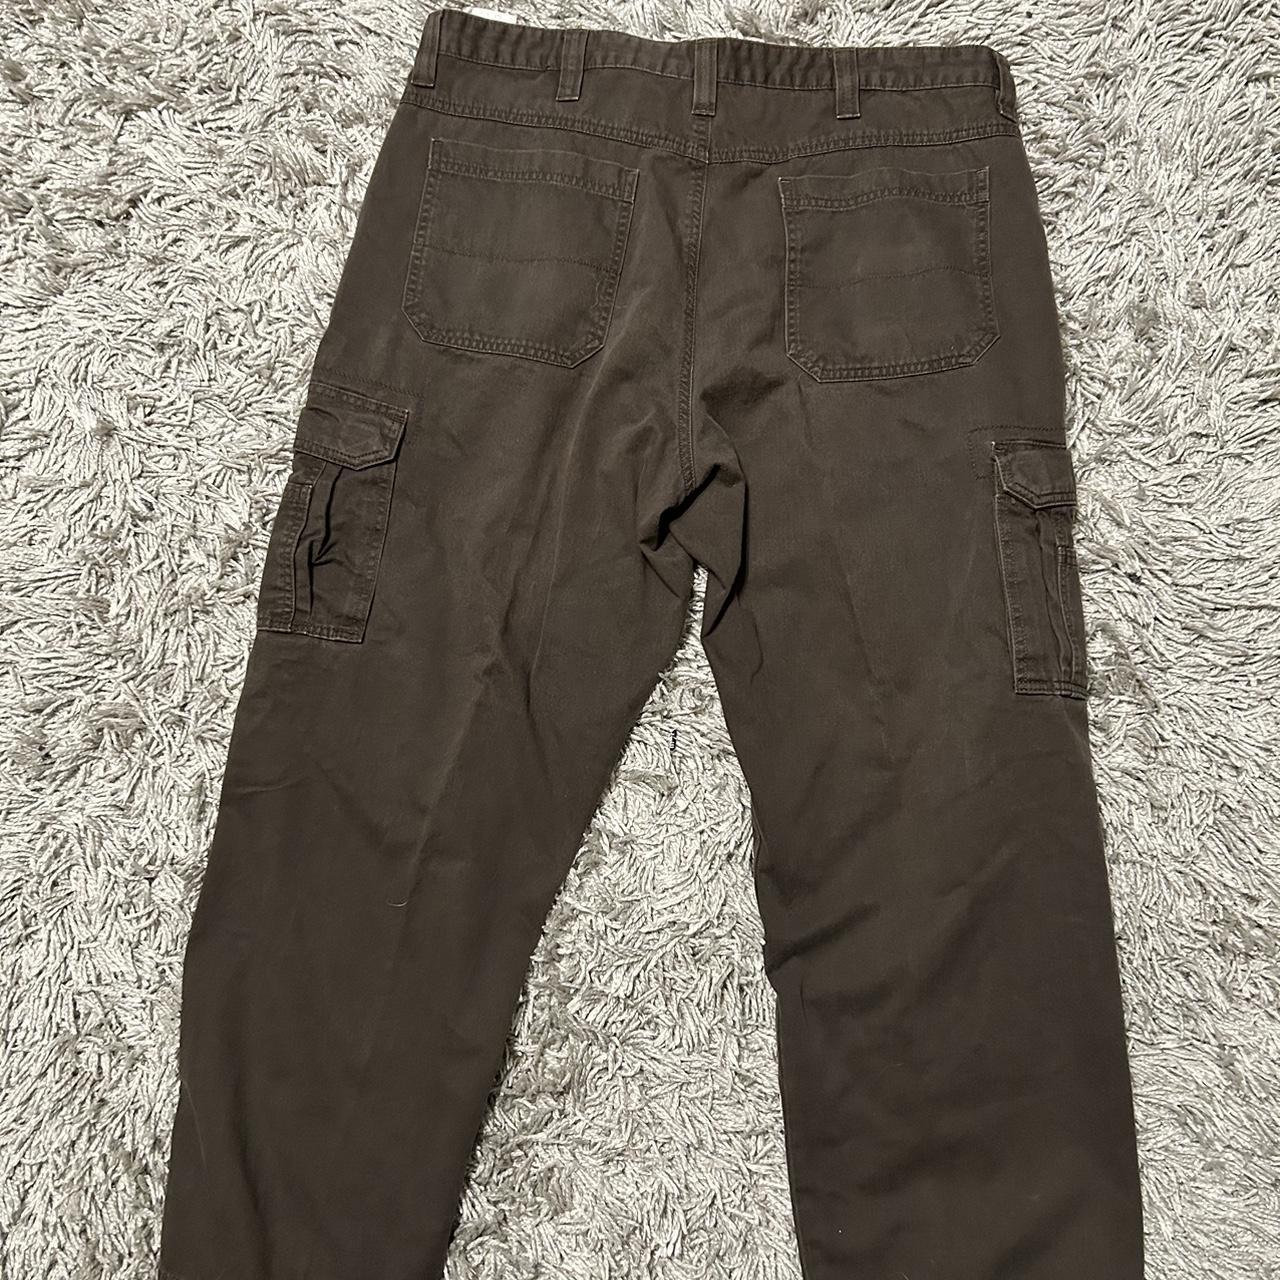 Dark brown wrangler cargo/ carpenter pants -in... - Depop